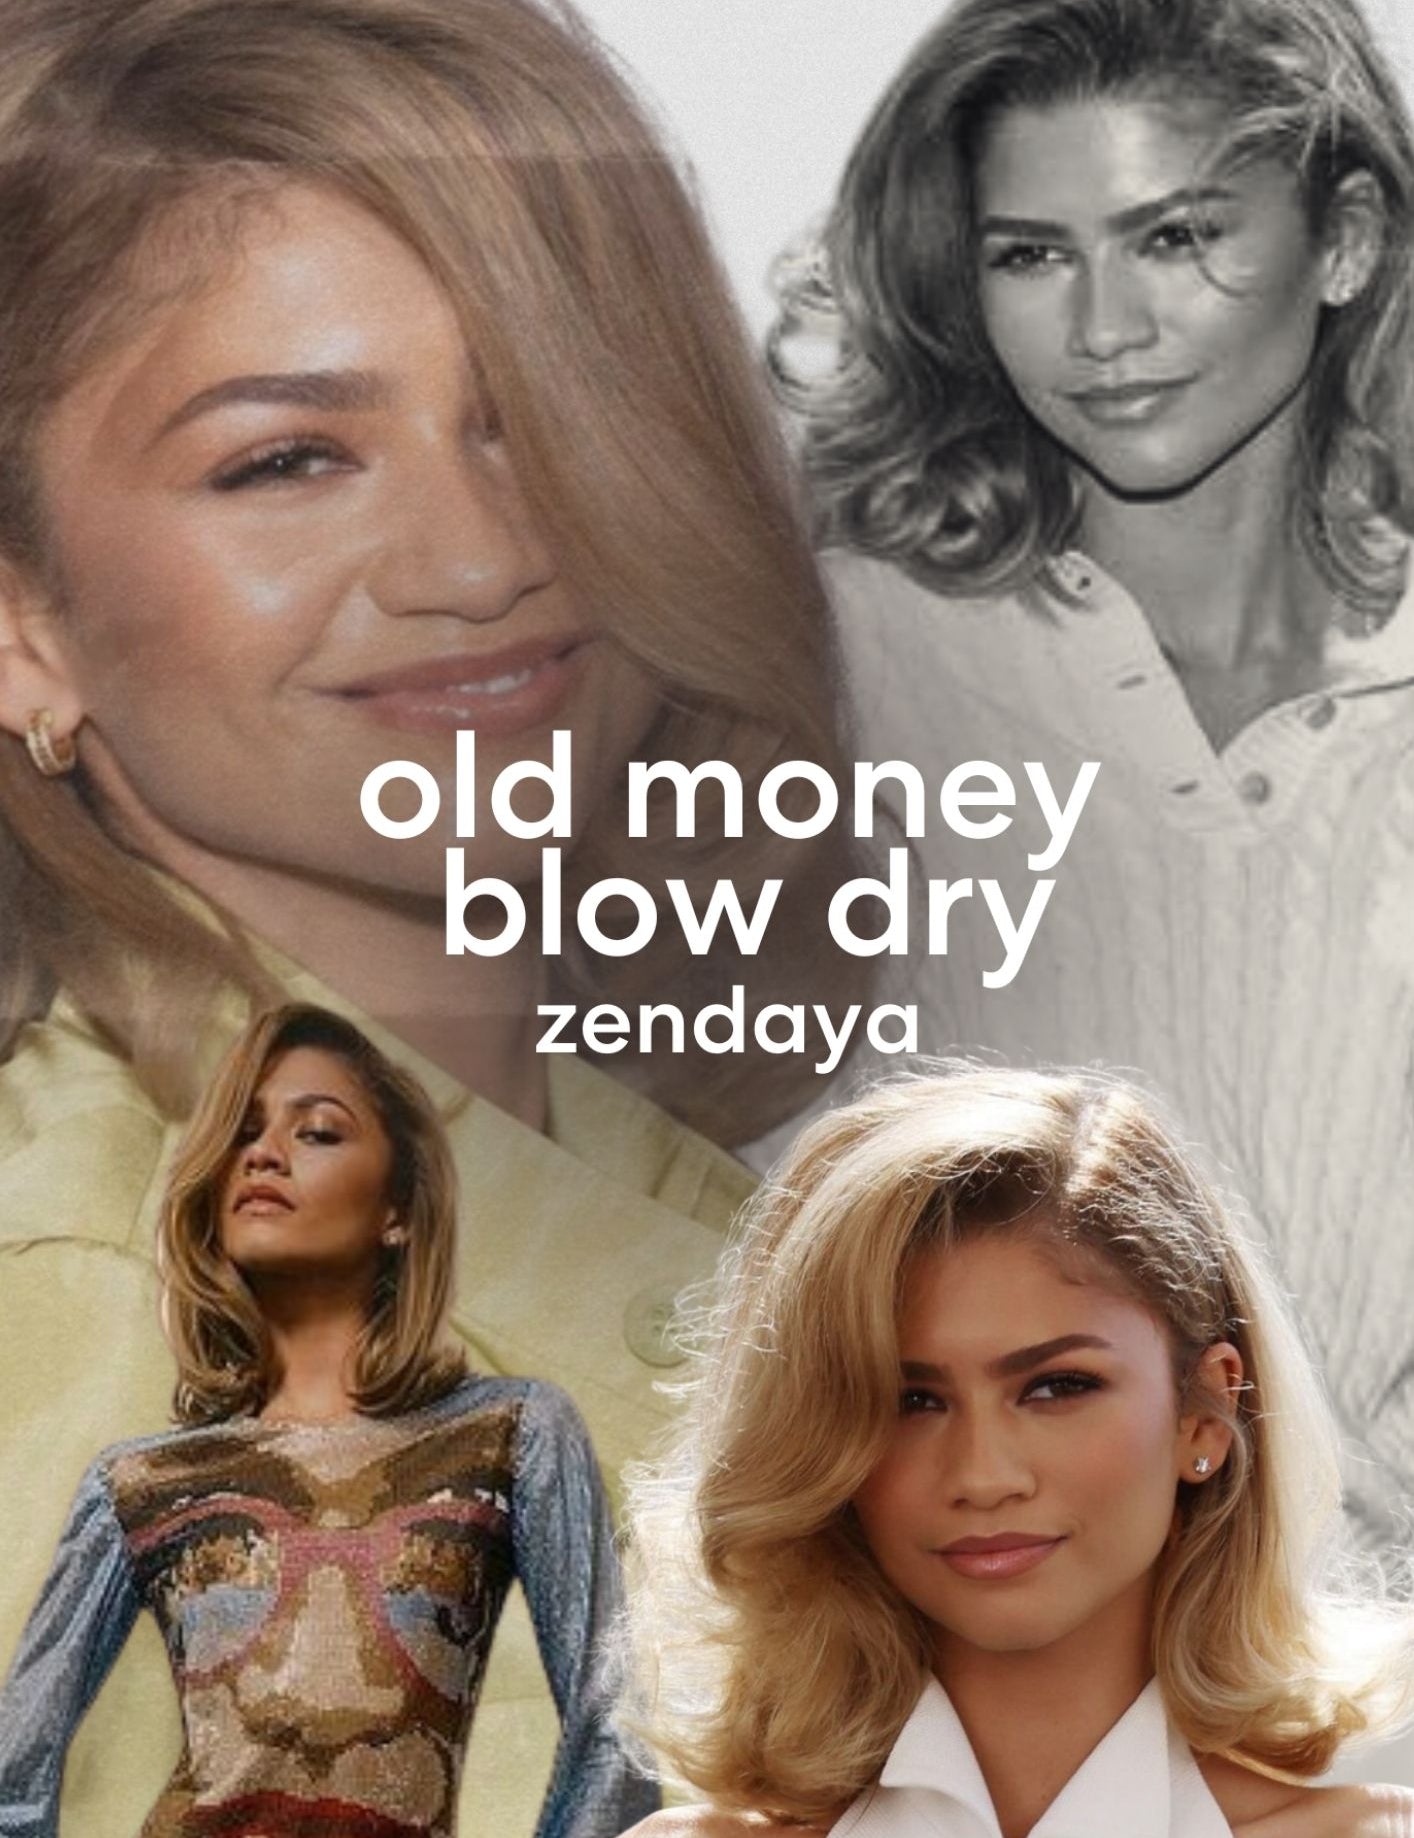 Zendaya’s Old Money blowdry is everything